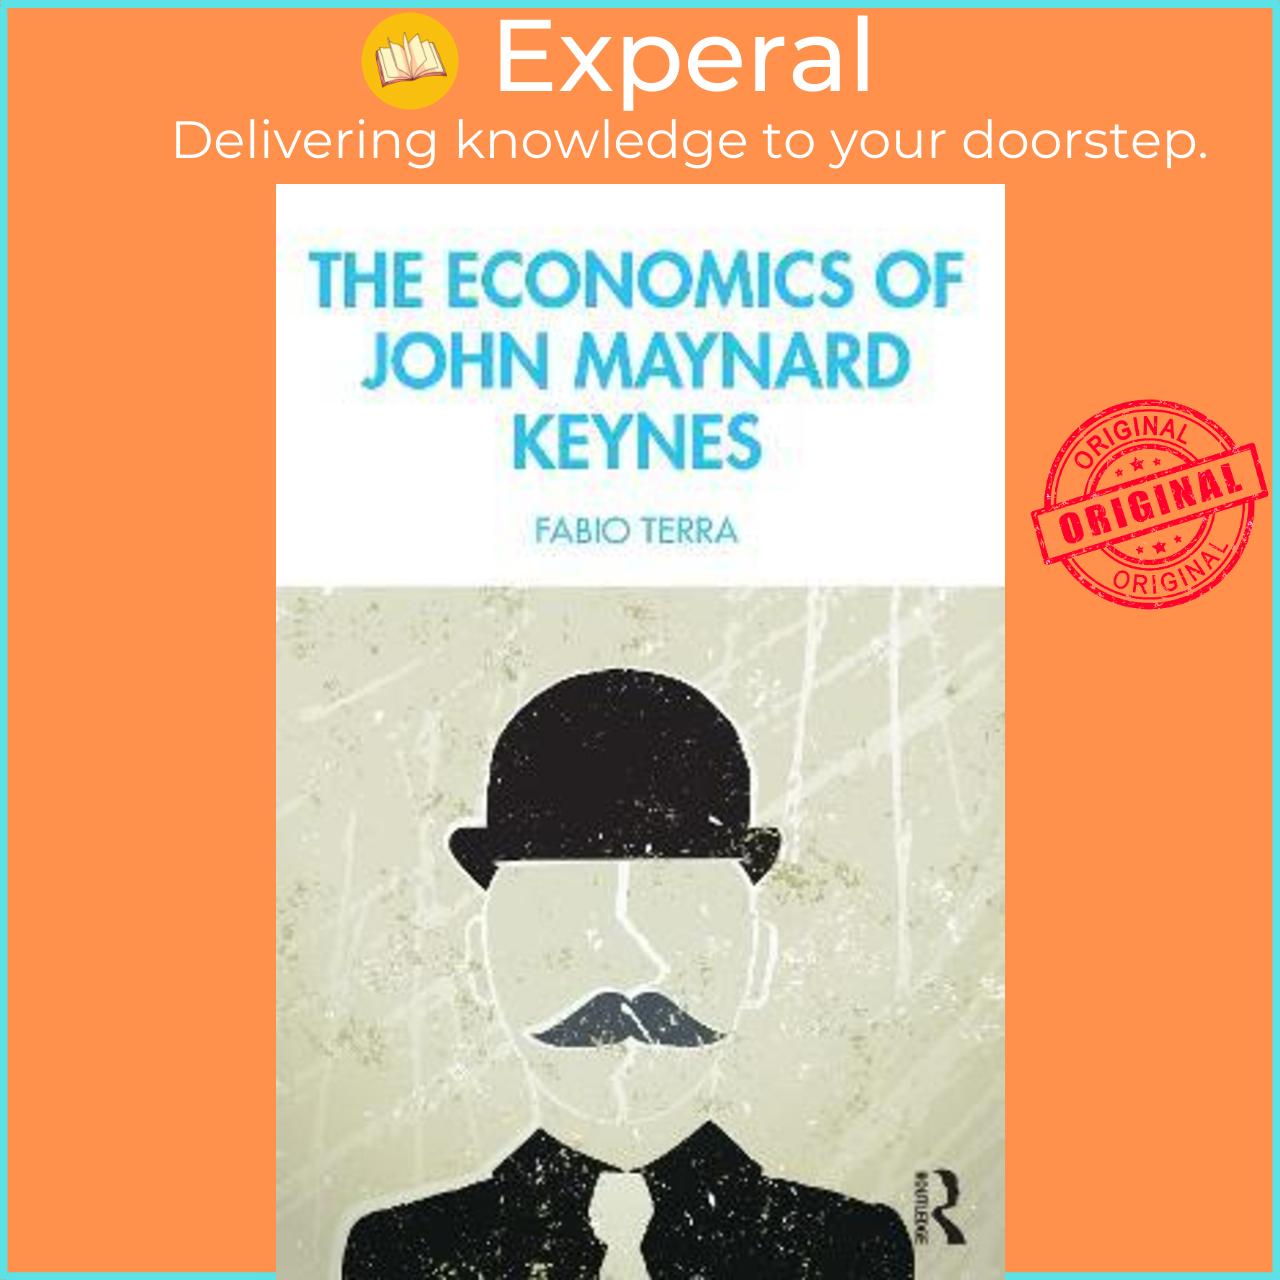 Sách - The Economics of John Maynard Keynes by Fabio Terra (UK edition, paperback)